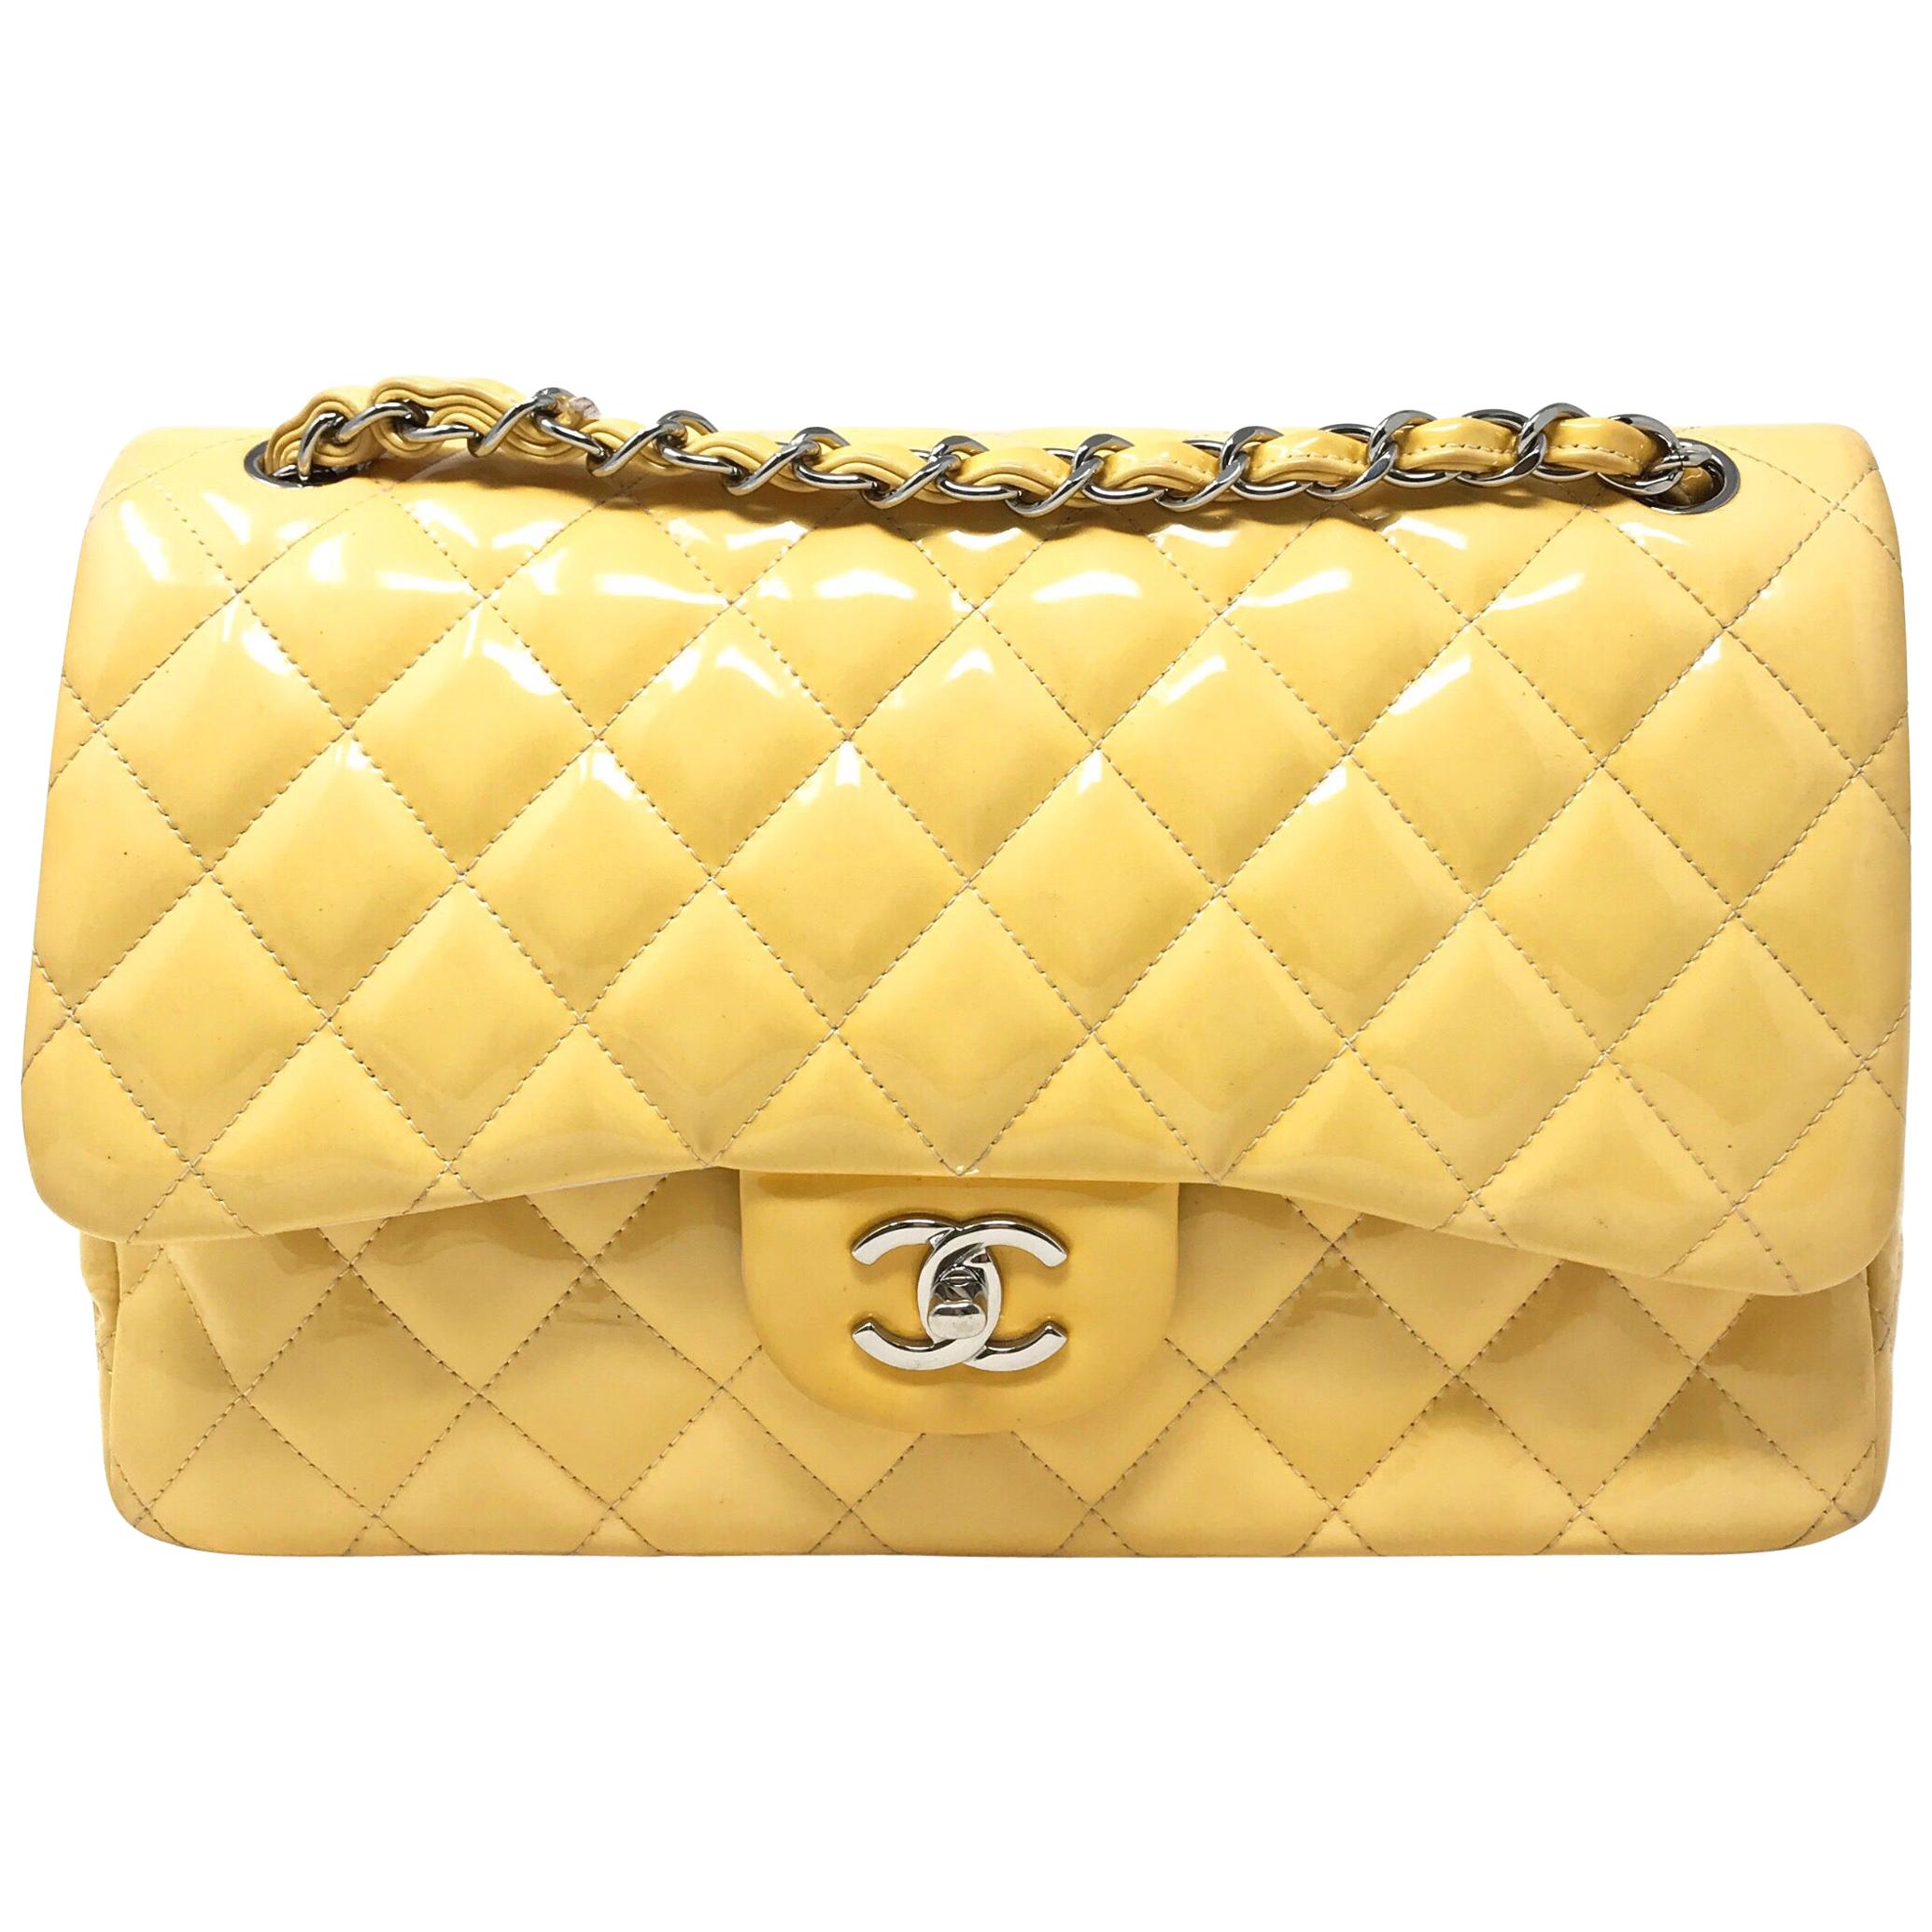 CHANEL PARIS Classic Jumbo bag patent leather Yellow 2014